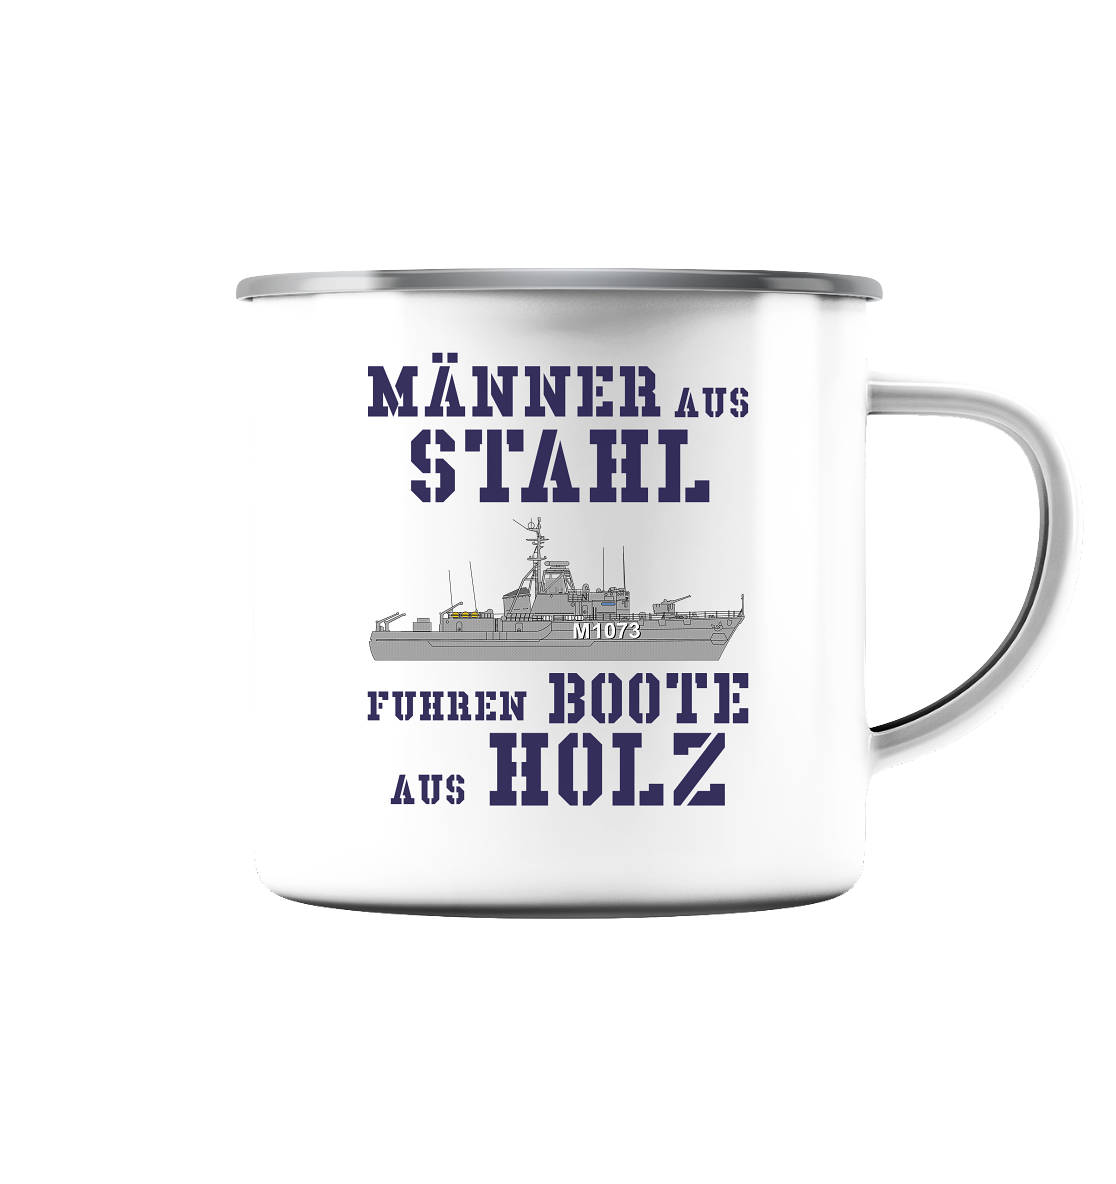 Männer aus Stahl...  HL-Boot M1073 SCHLESWIG - Emaille Tasse (Silber)